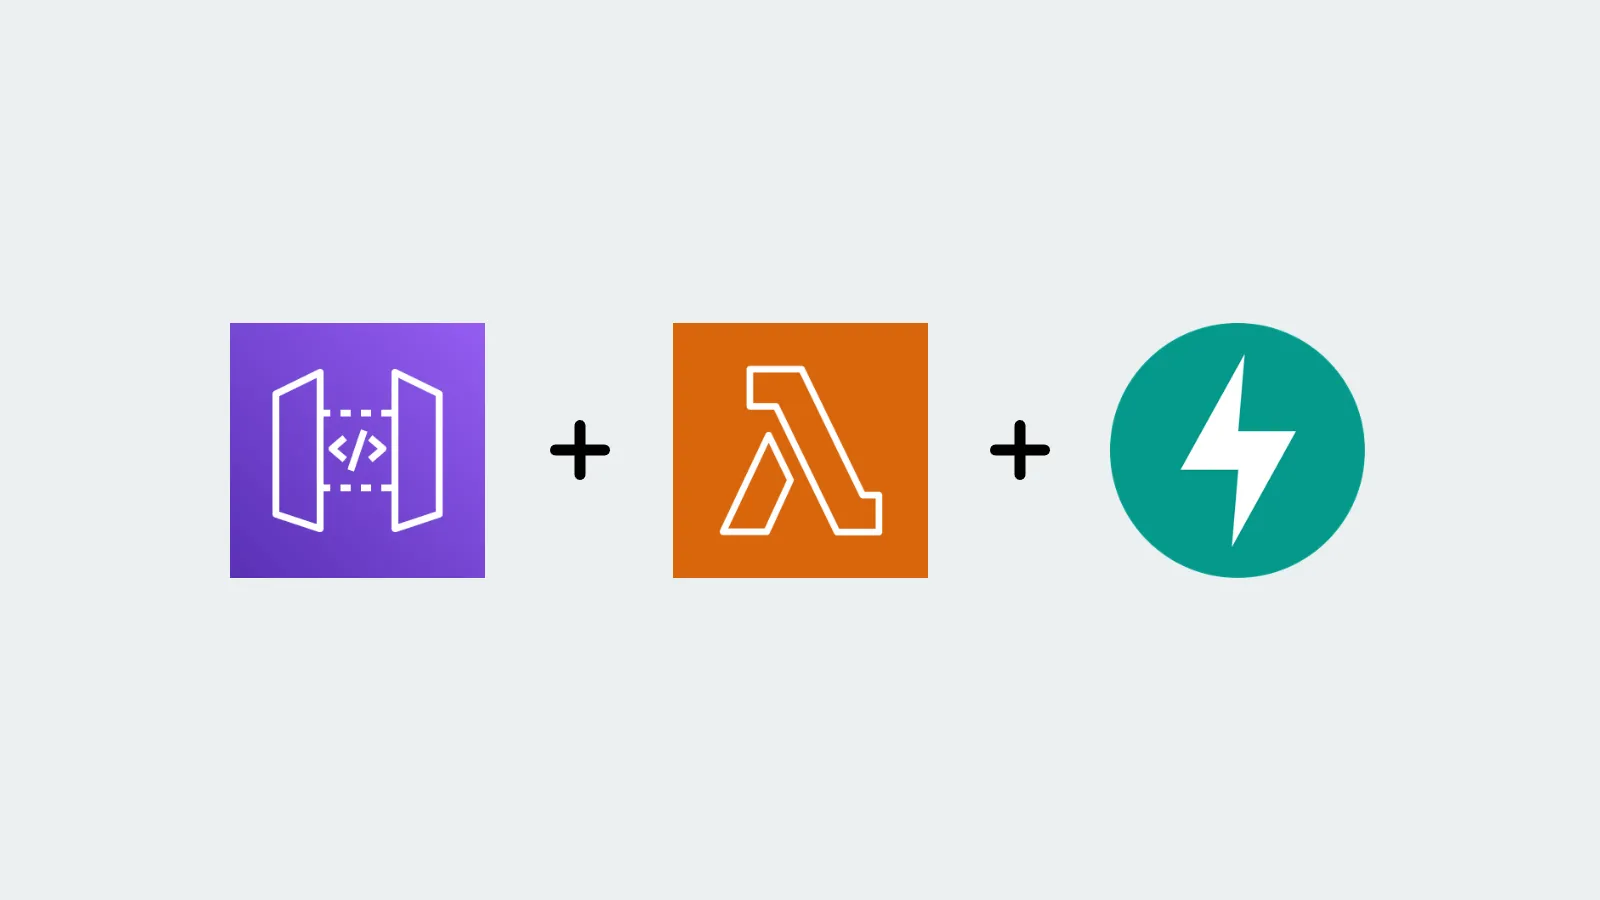 API Gateway, Lambda, and FastAPI logos in a simple architecture image